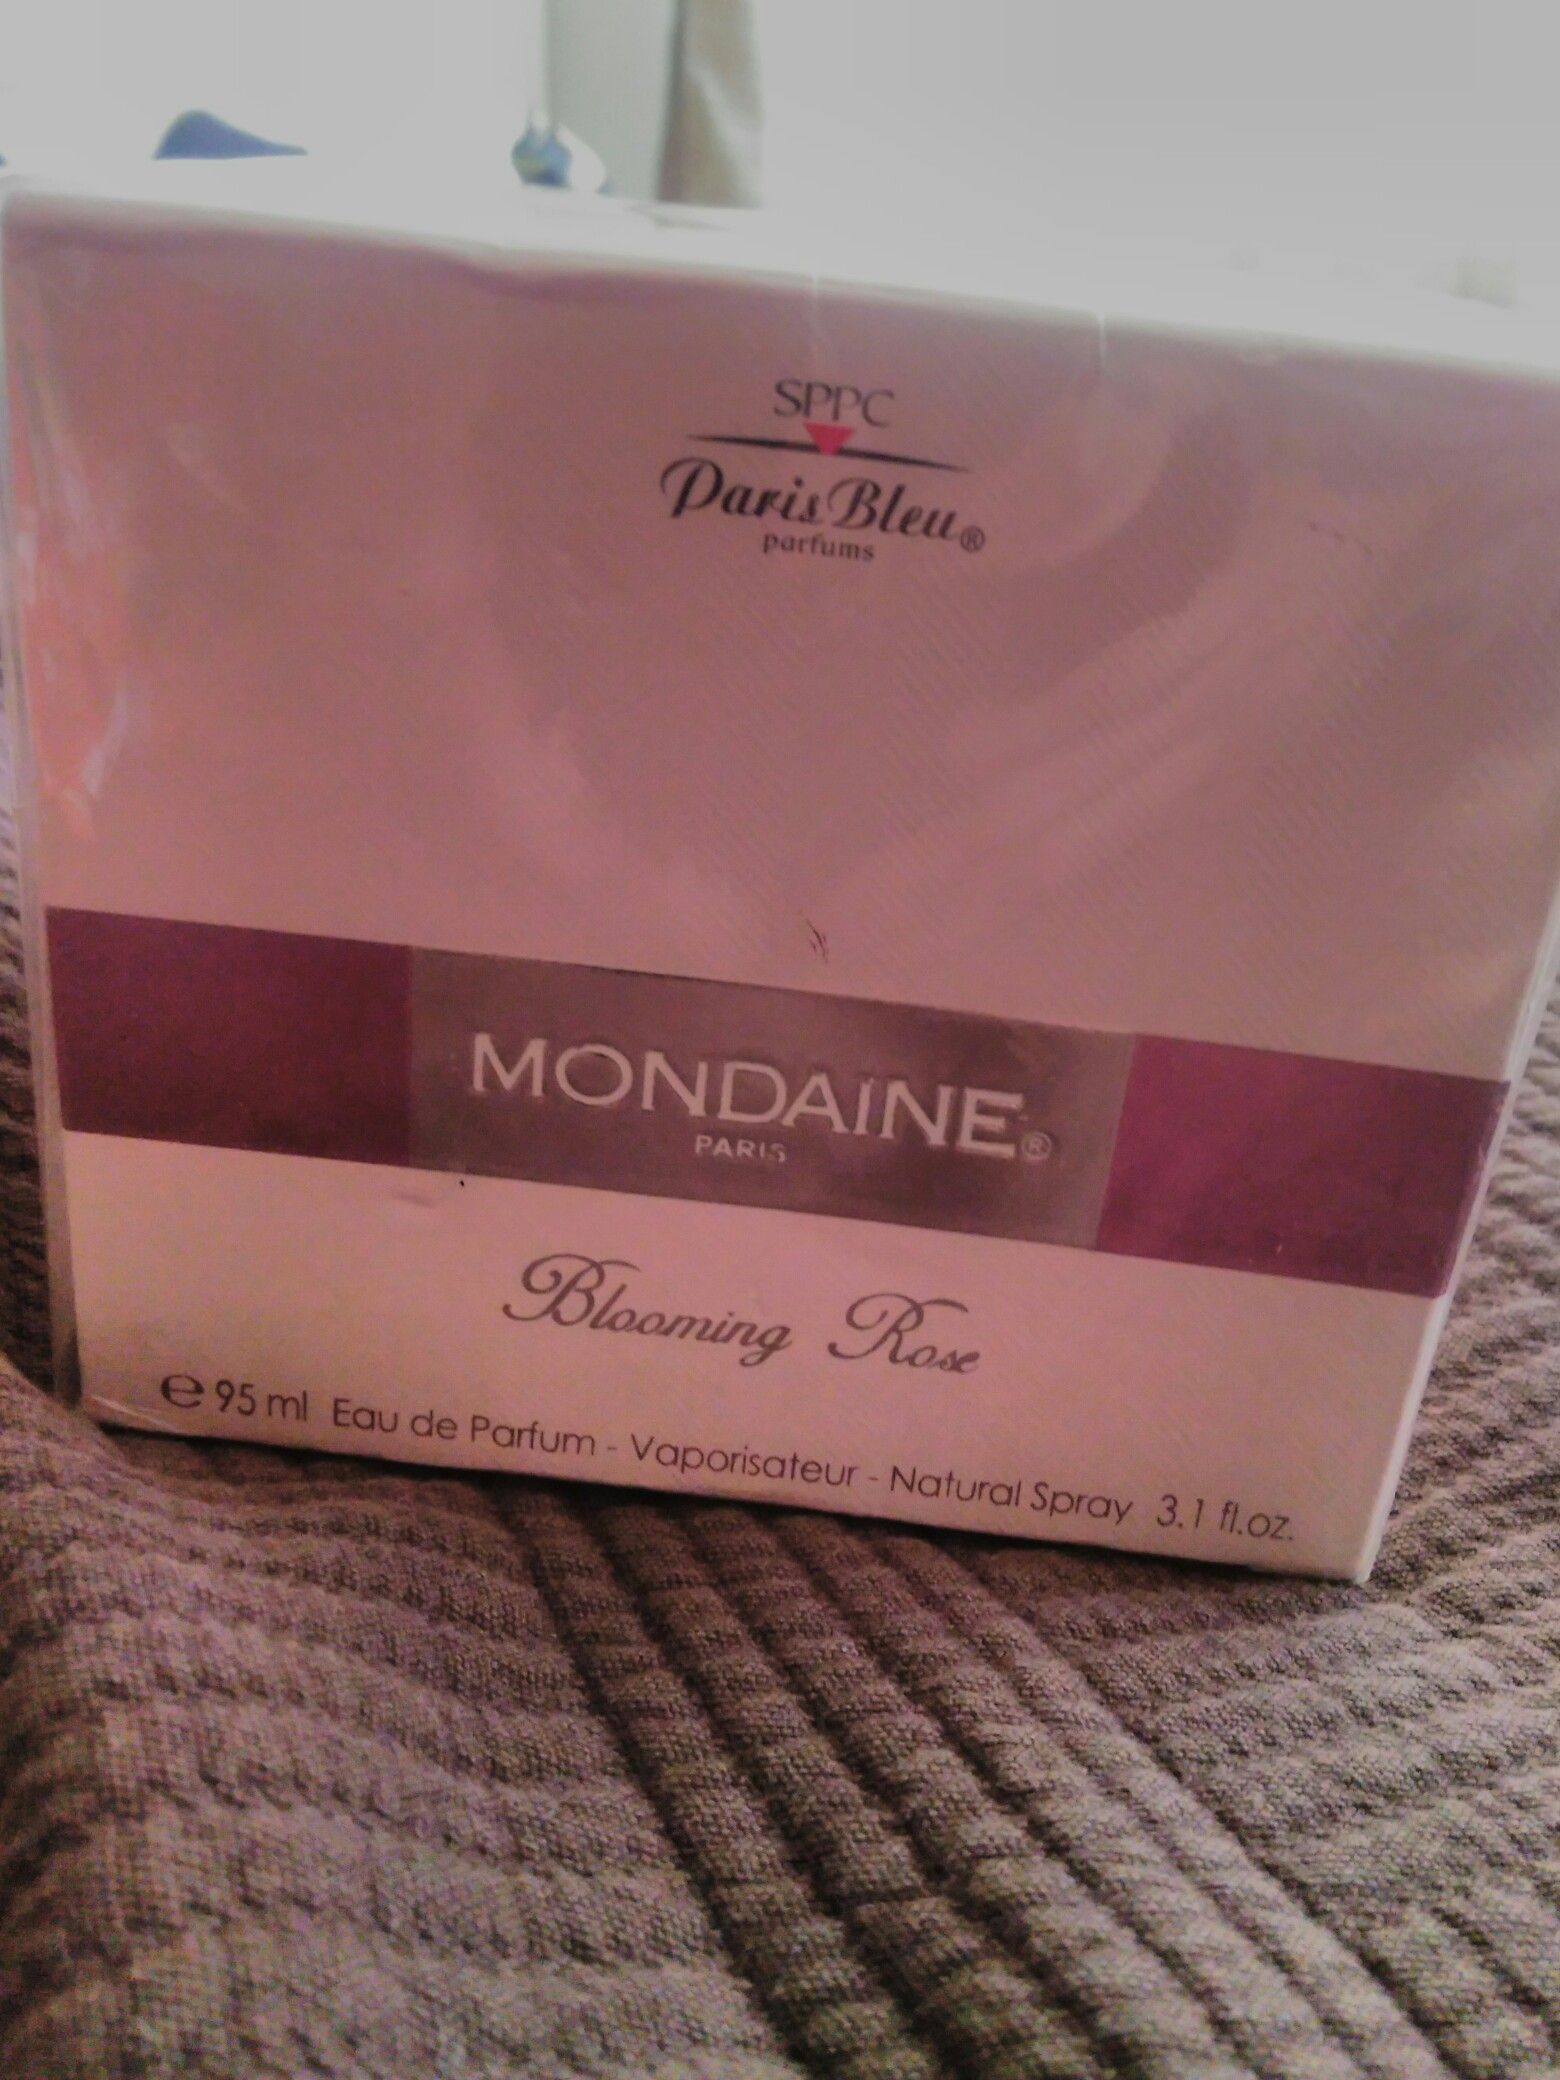 Mondaine Passion Yves de Sistelle perfume - a fragrance for women